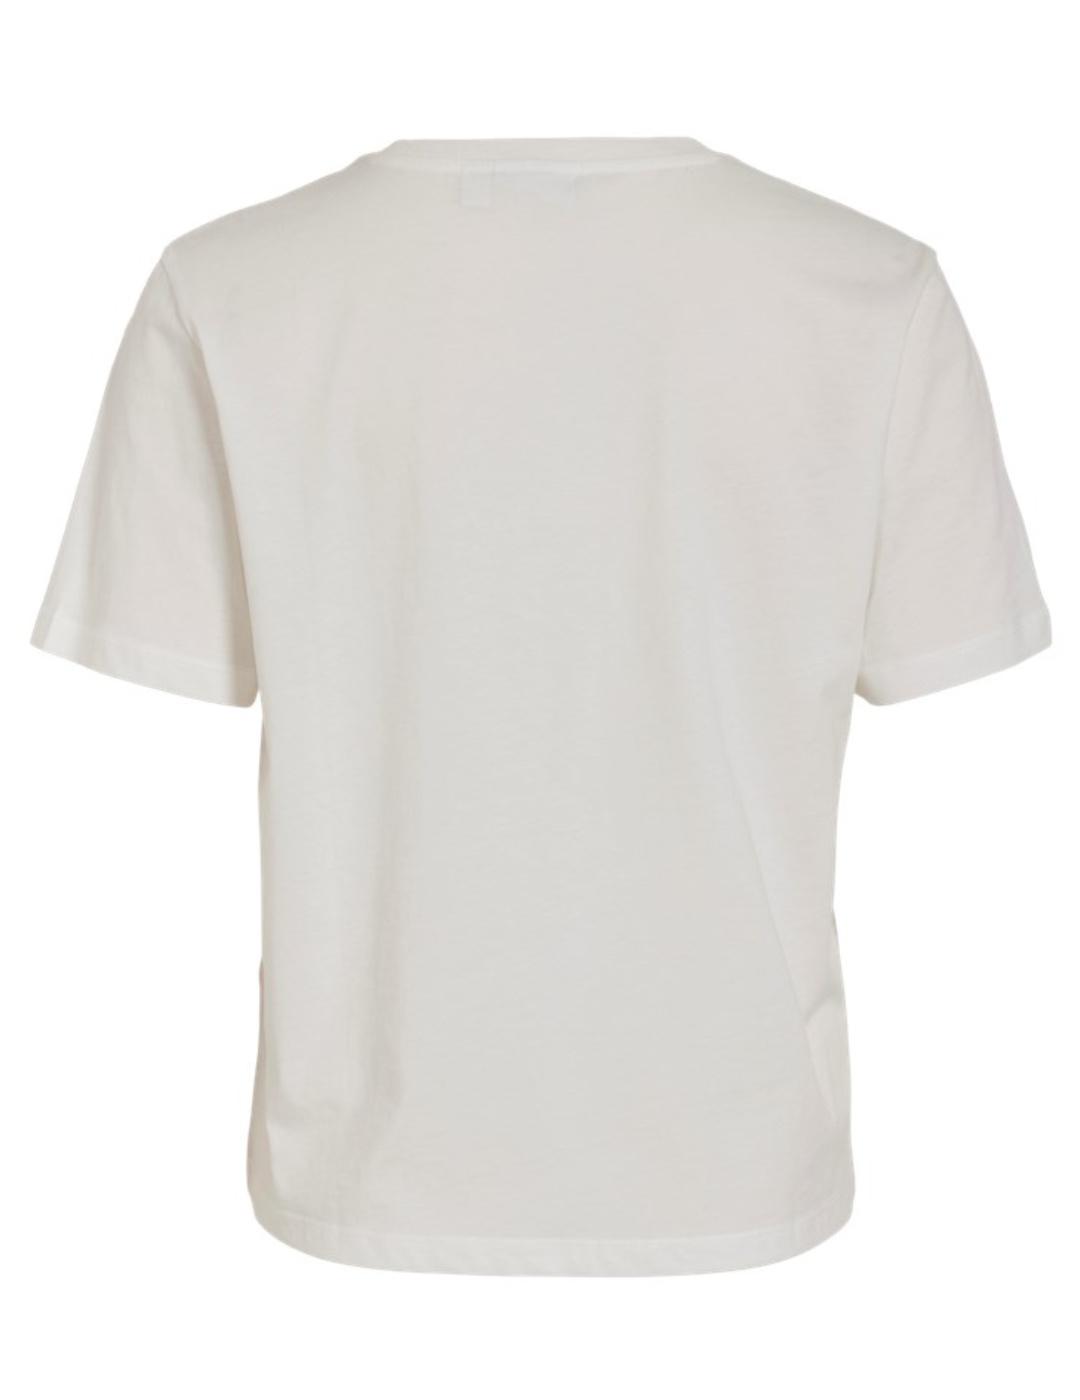 Camiseta Vila Bil blanca letra Lemon manga corta para mujer